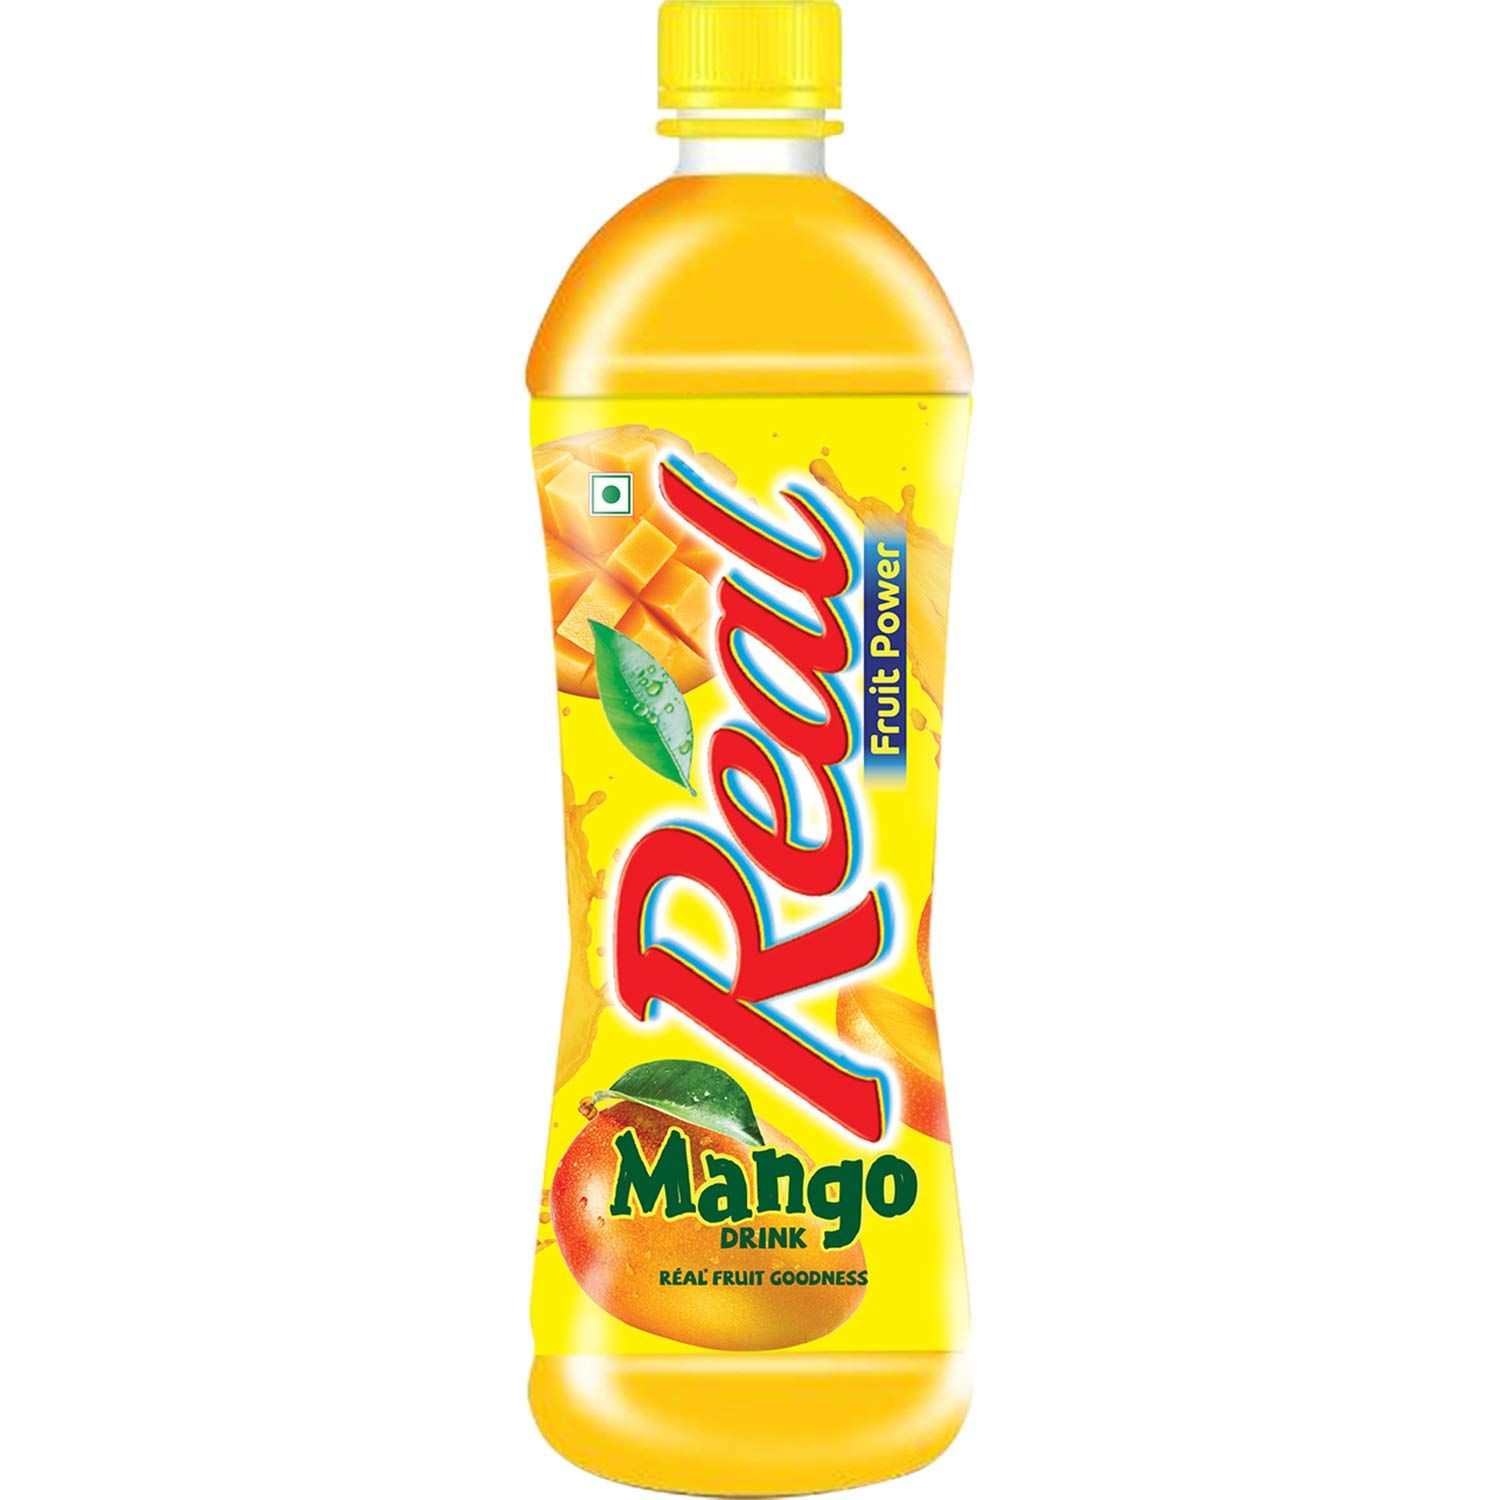 Real Mango Drink Image